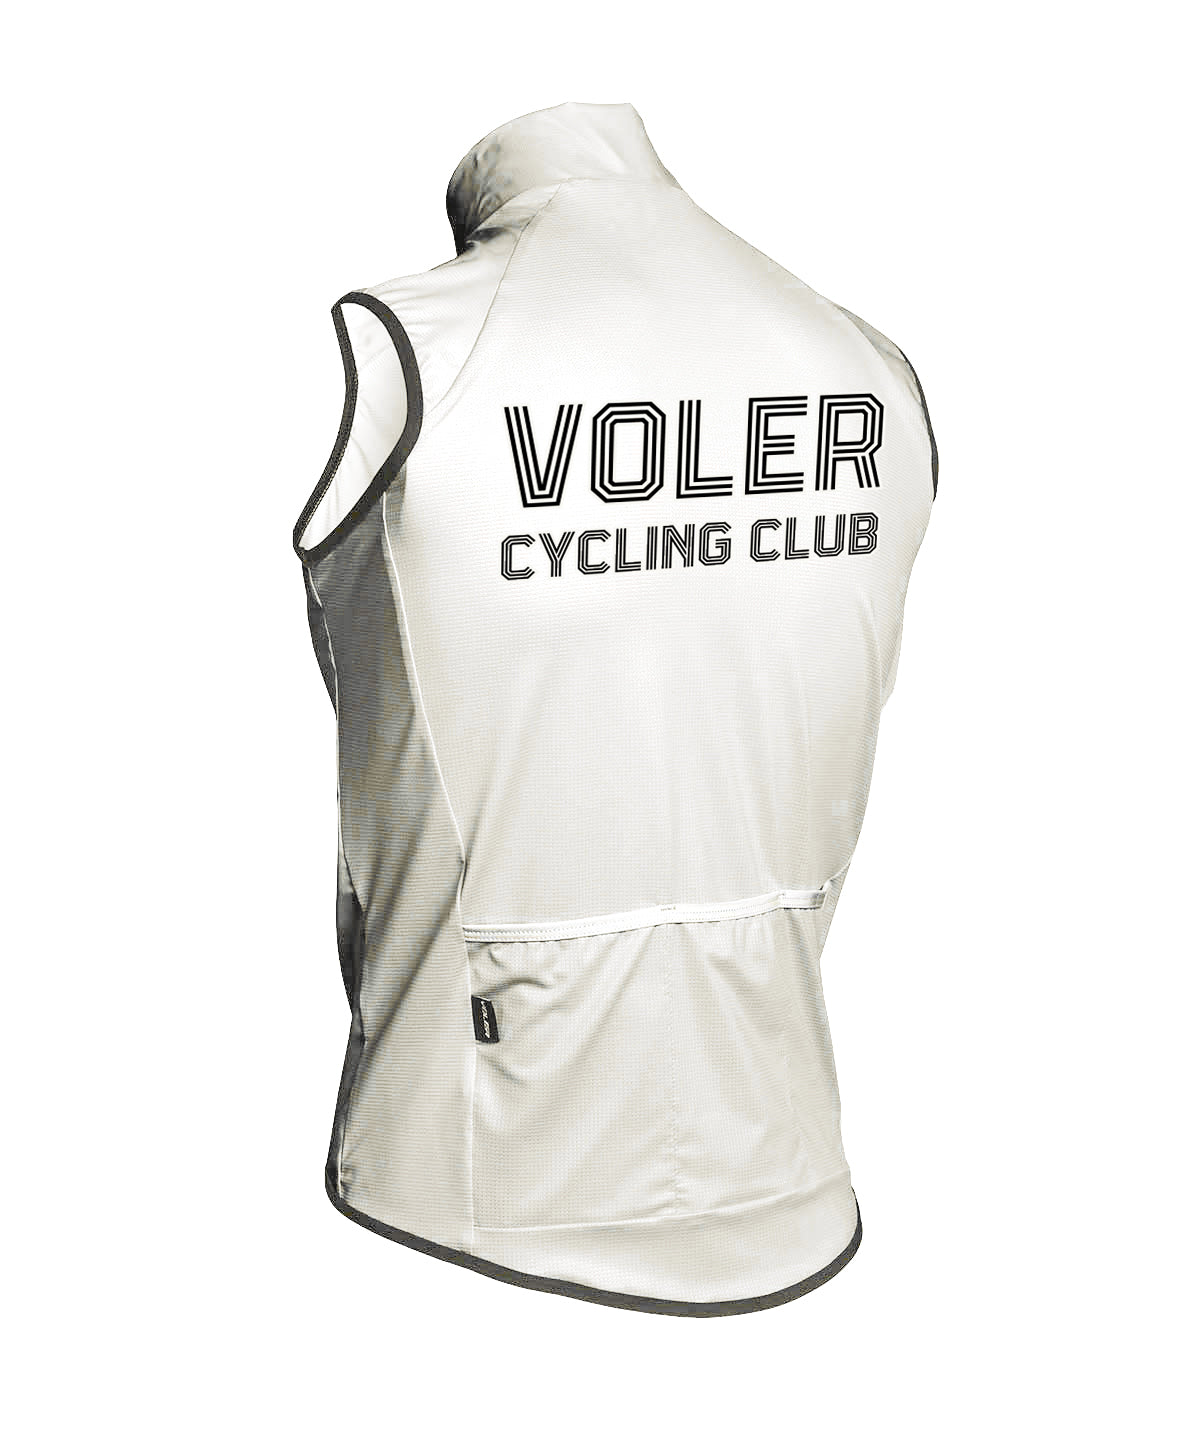 M. WIND VEST - VOLER CYCLING CLUB